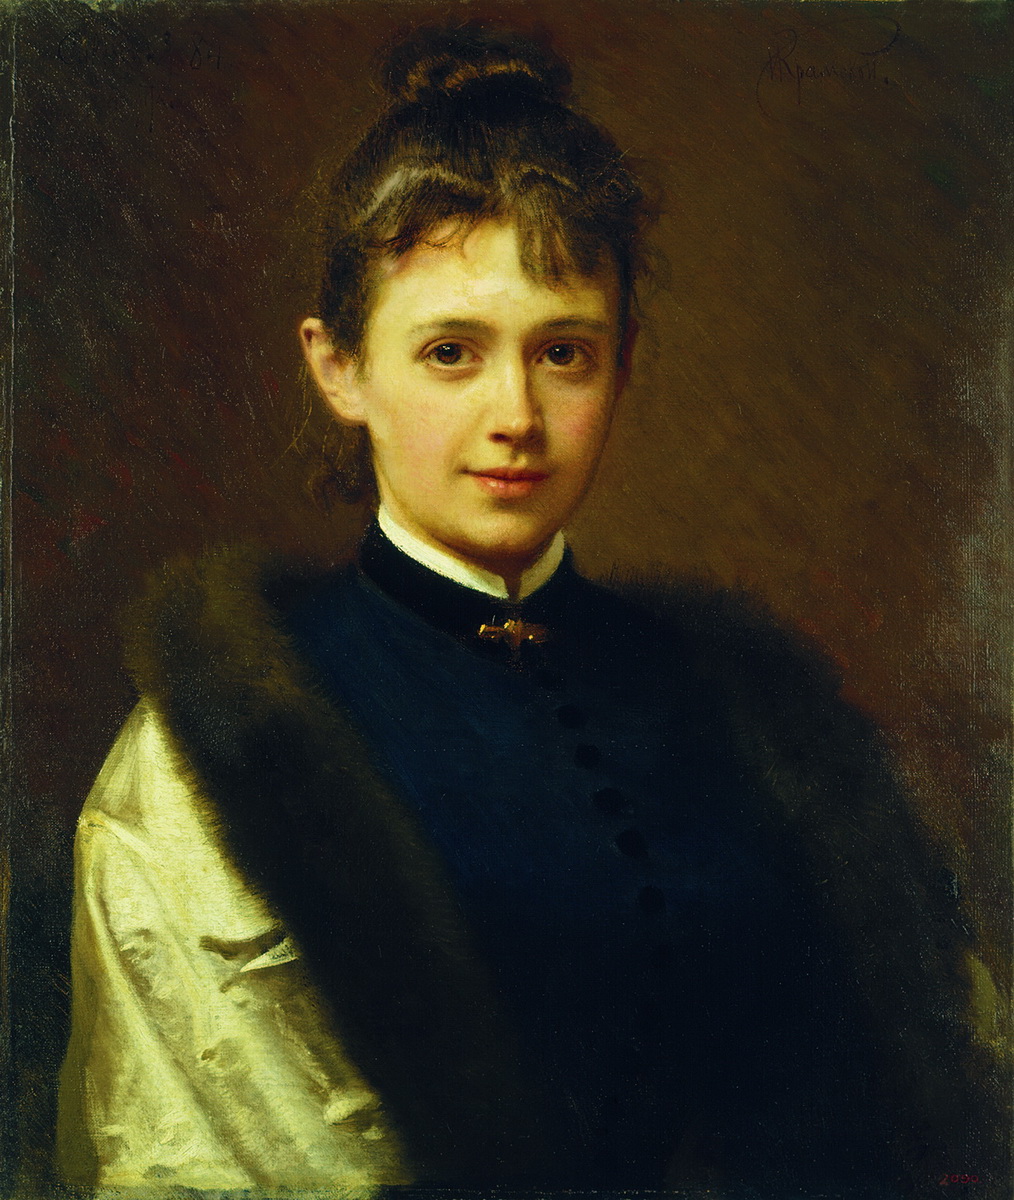 Russian Artist Ivan Kramskoi (1837-1887)